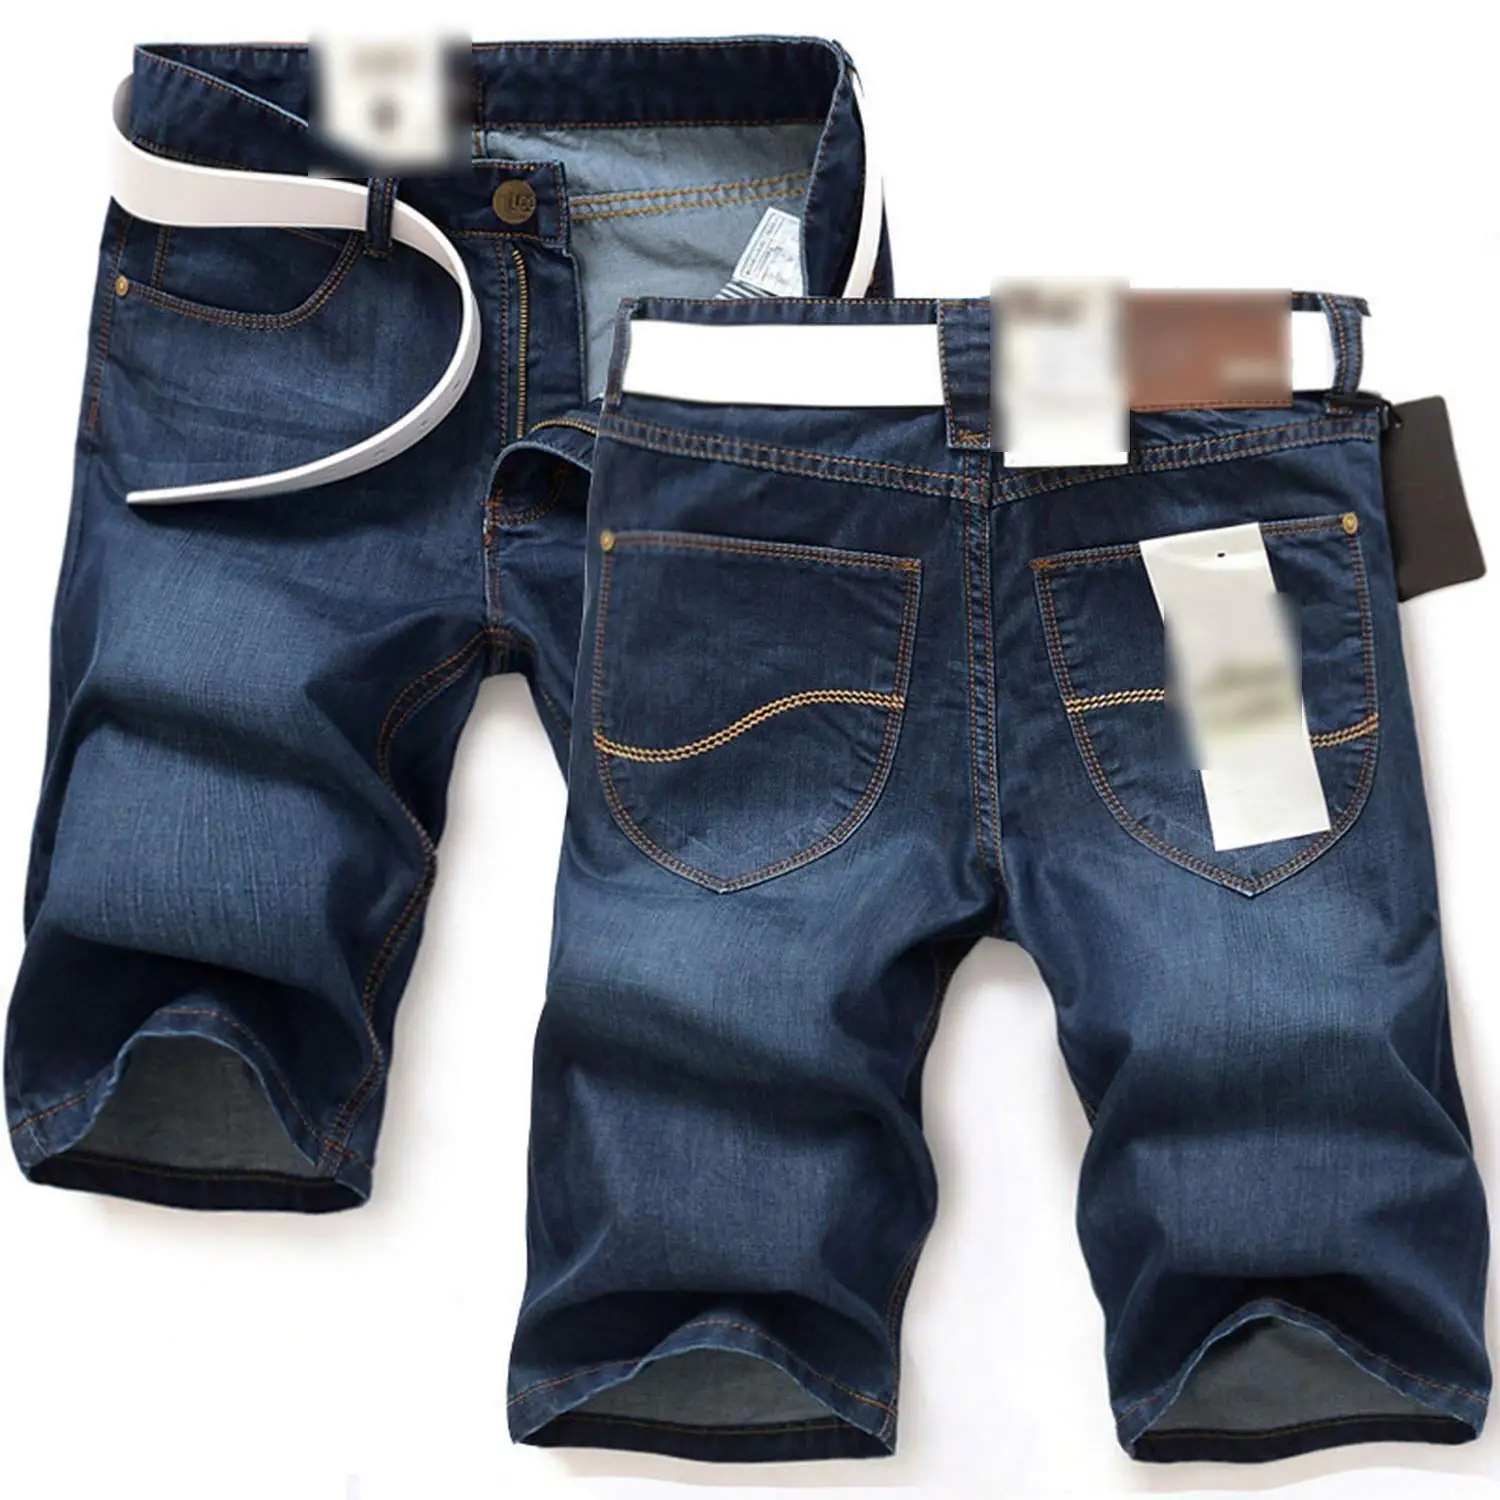 Buy Aancy New Summer Jeans Men Short Casual Thin Short Jeans Homme 2018 ...